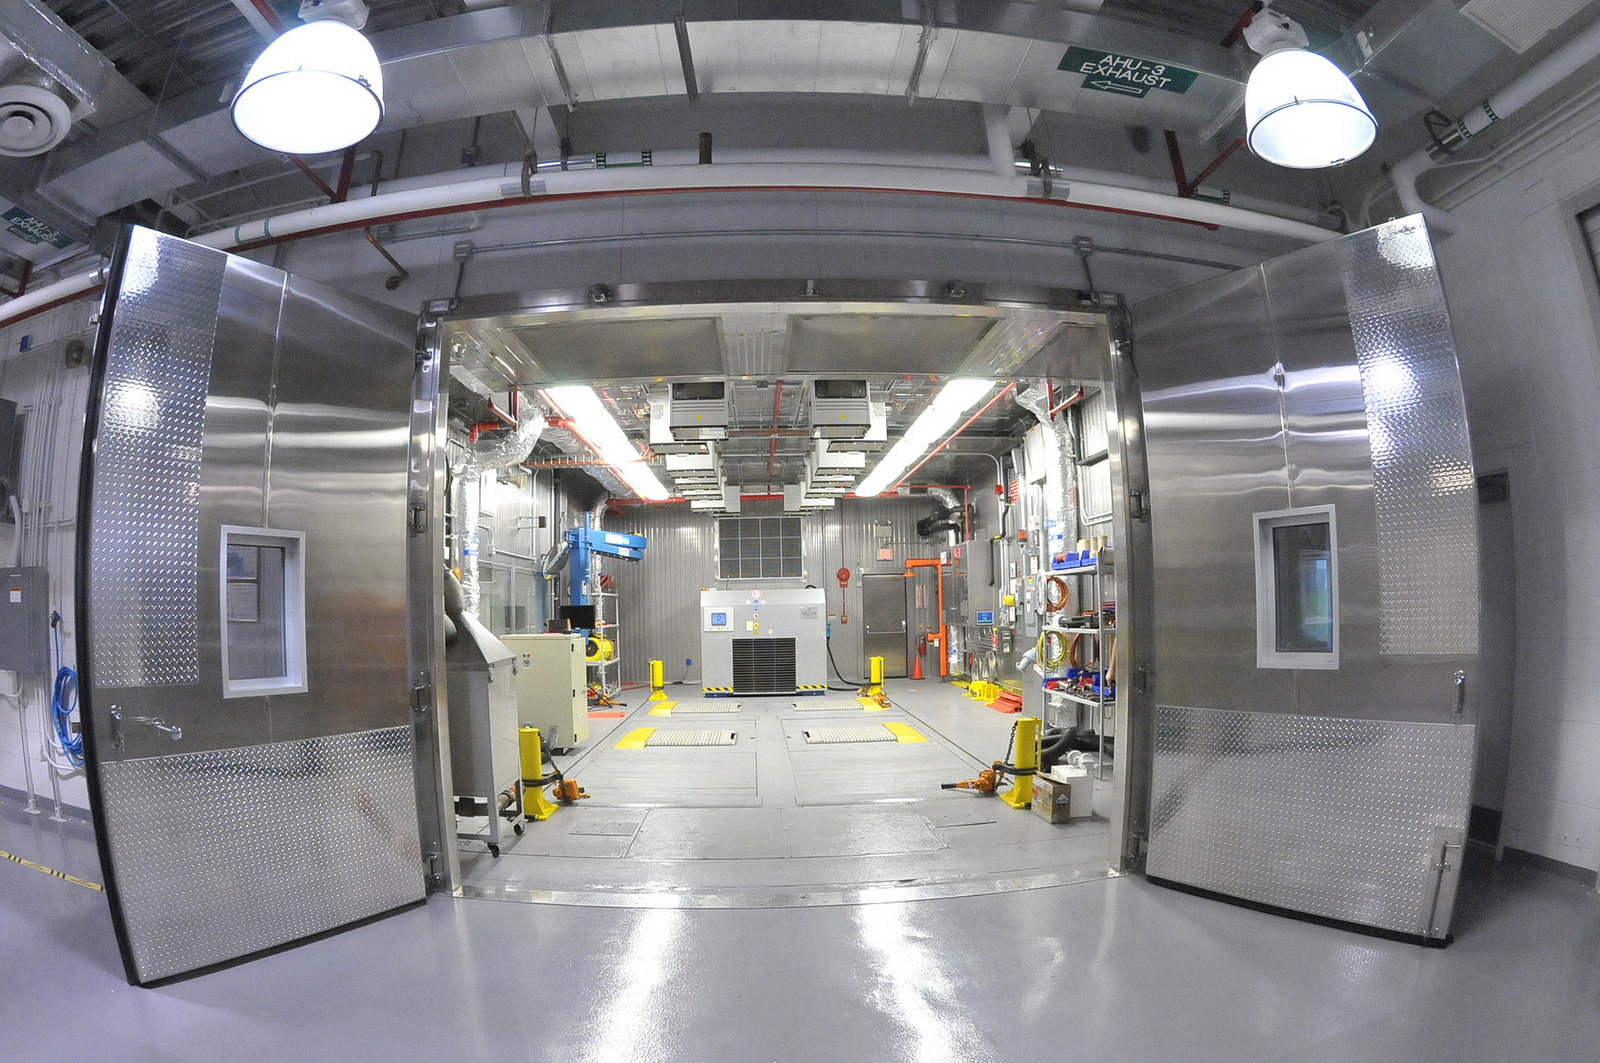 Advanced Powertrain Research Facility